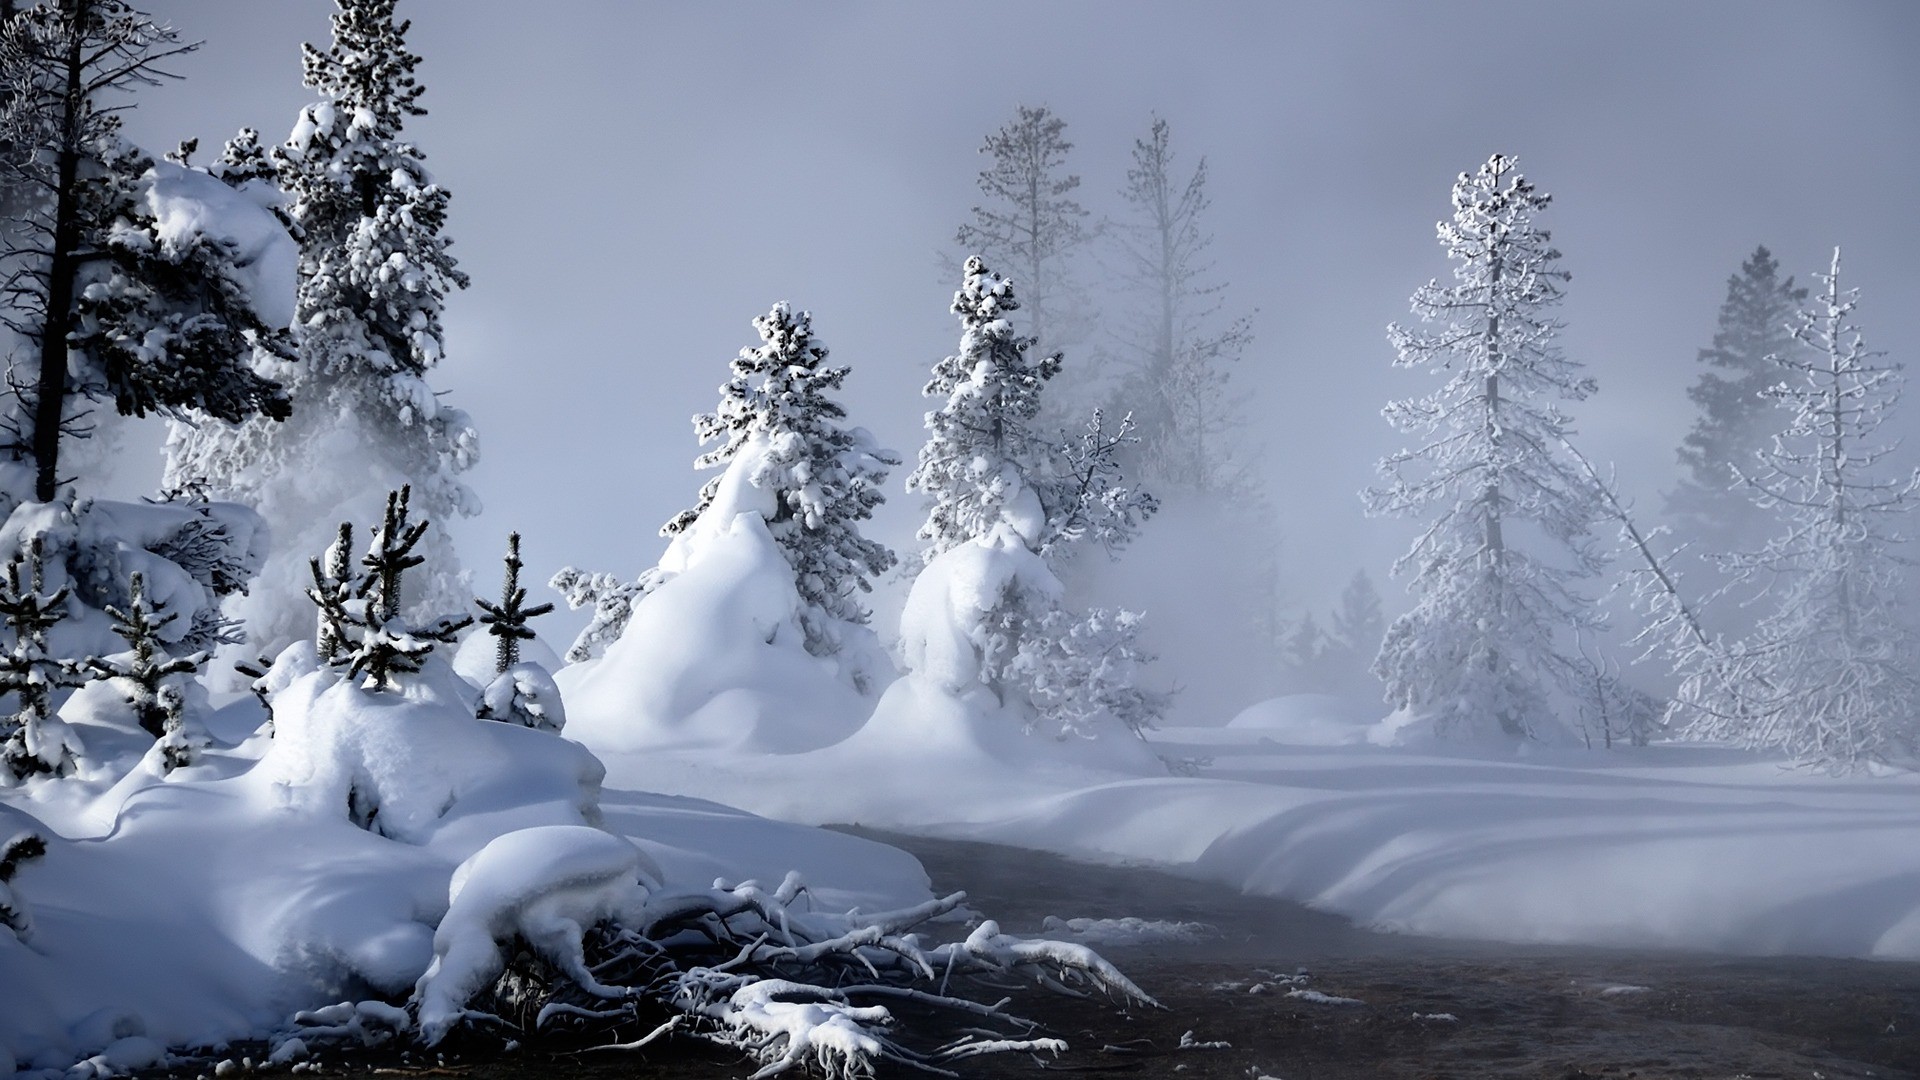 1920x1080 ... mystic winter wallpaper winter nature wallpapers in jpg format for ...